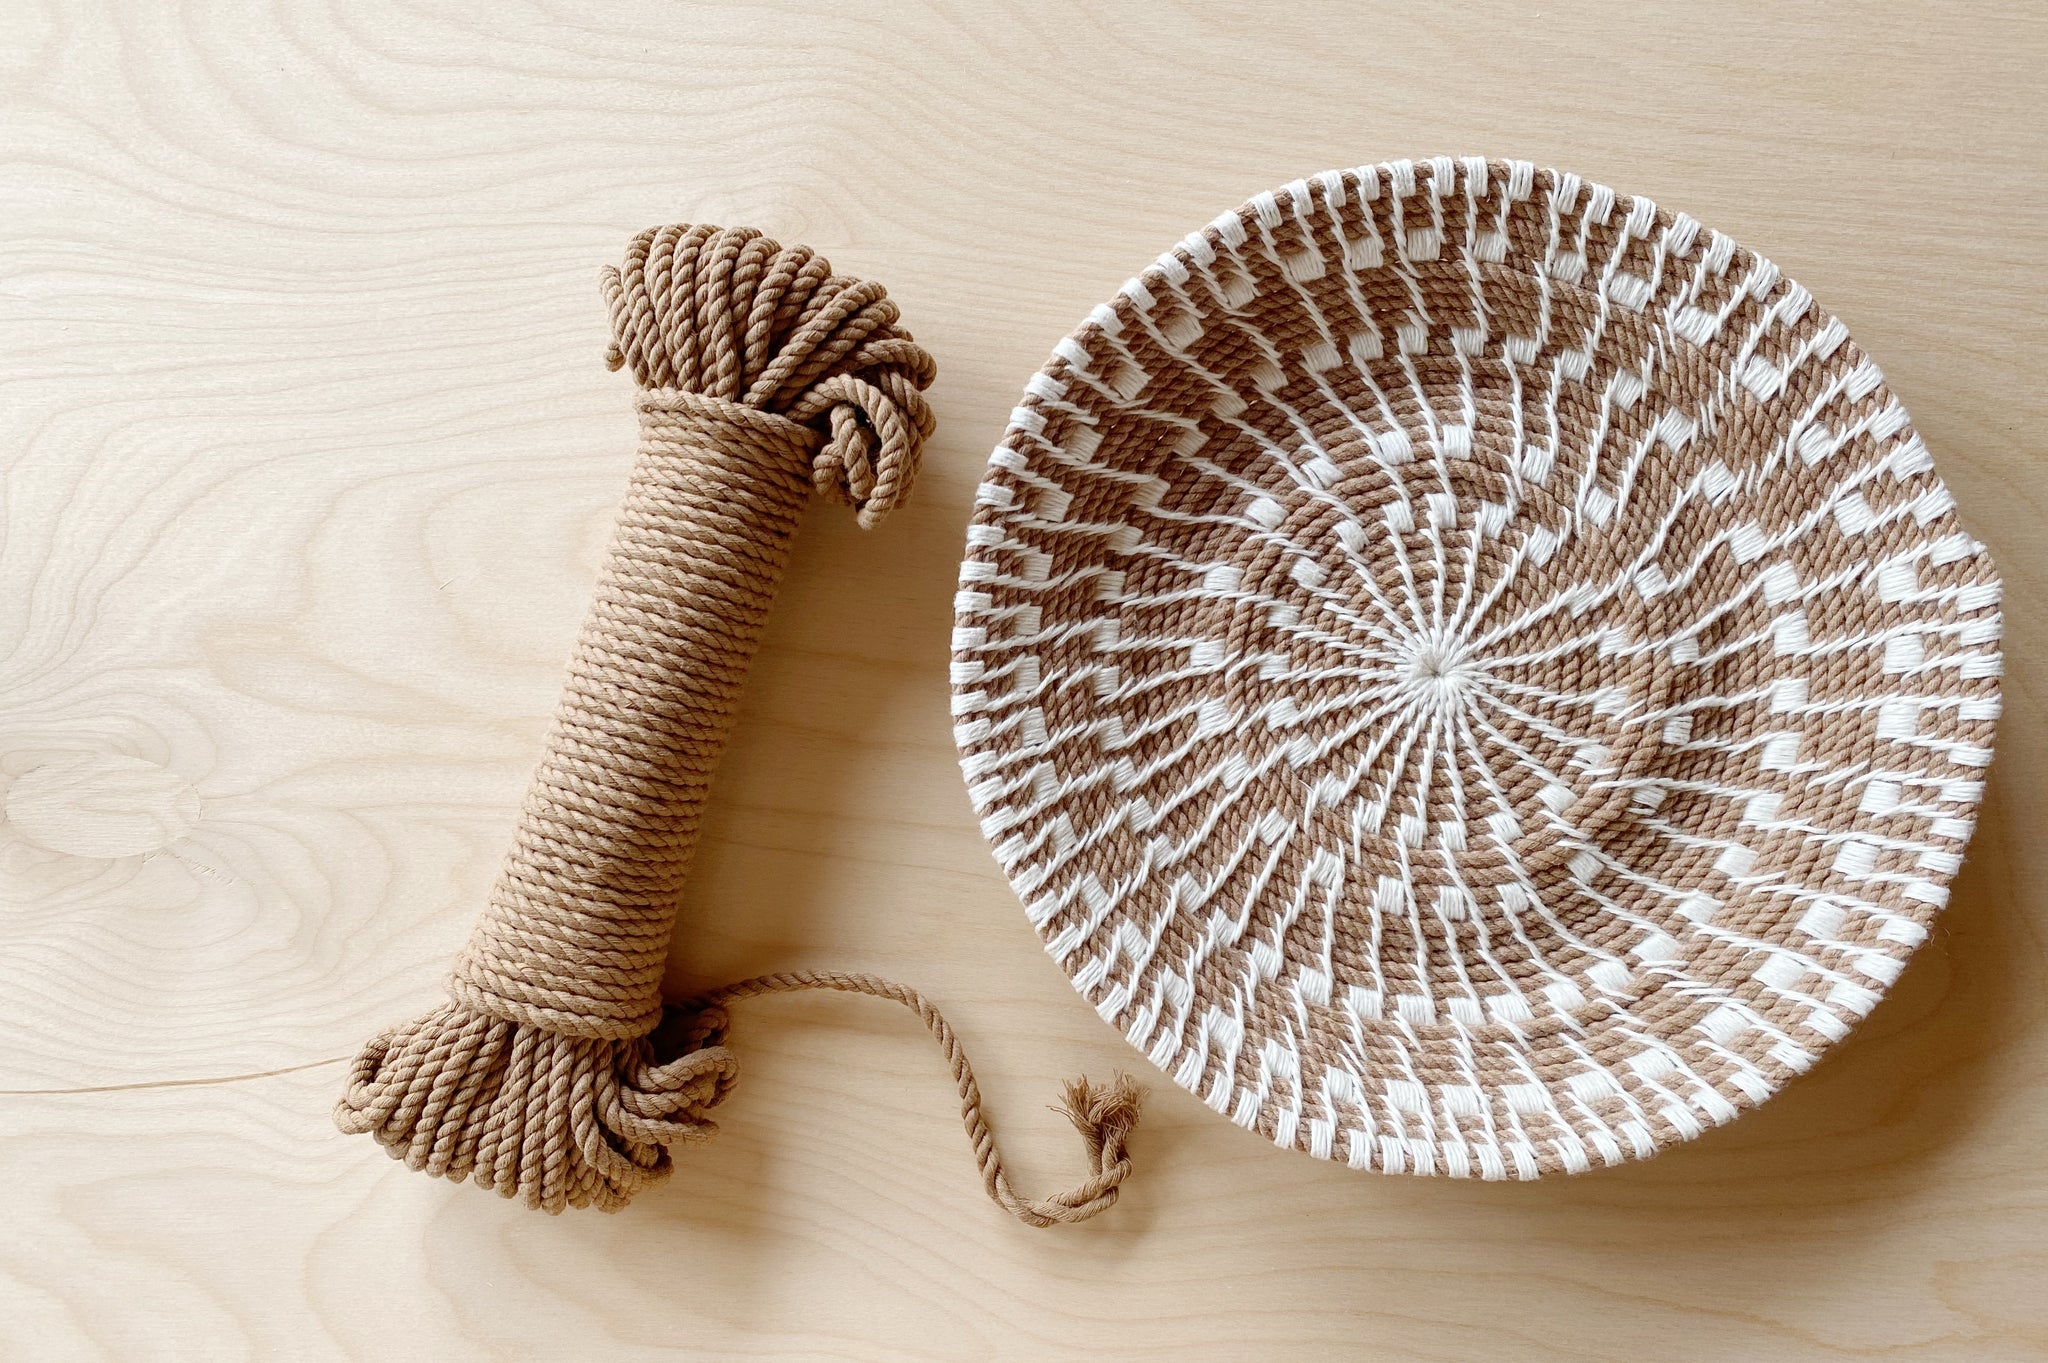 Sunburst Basket and a bundle of 5mm Wheat Rope